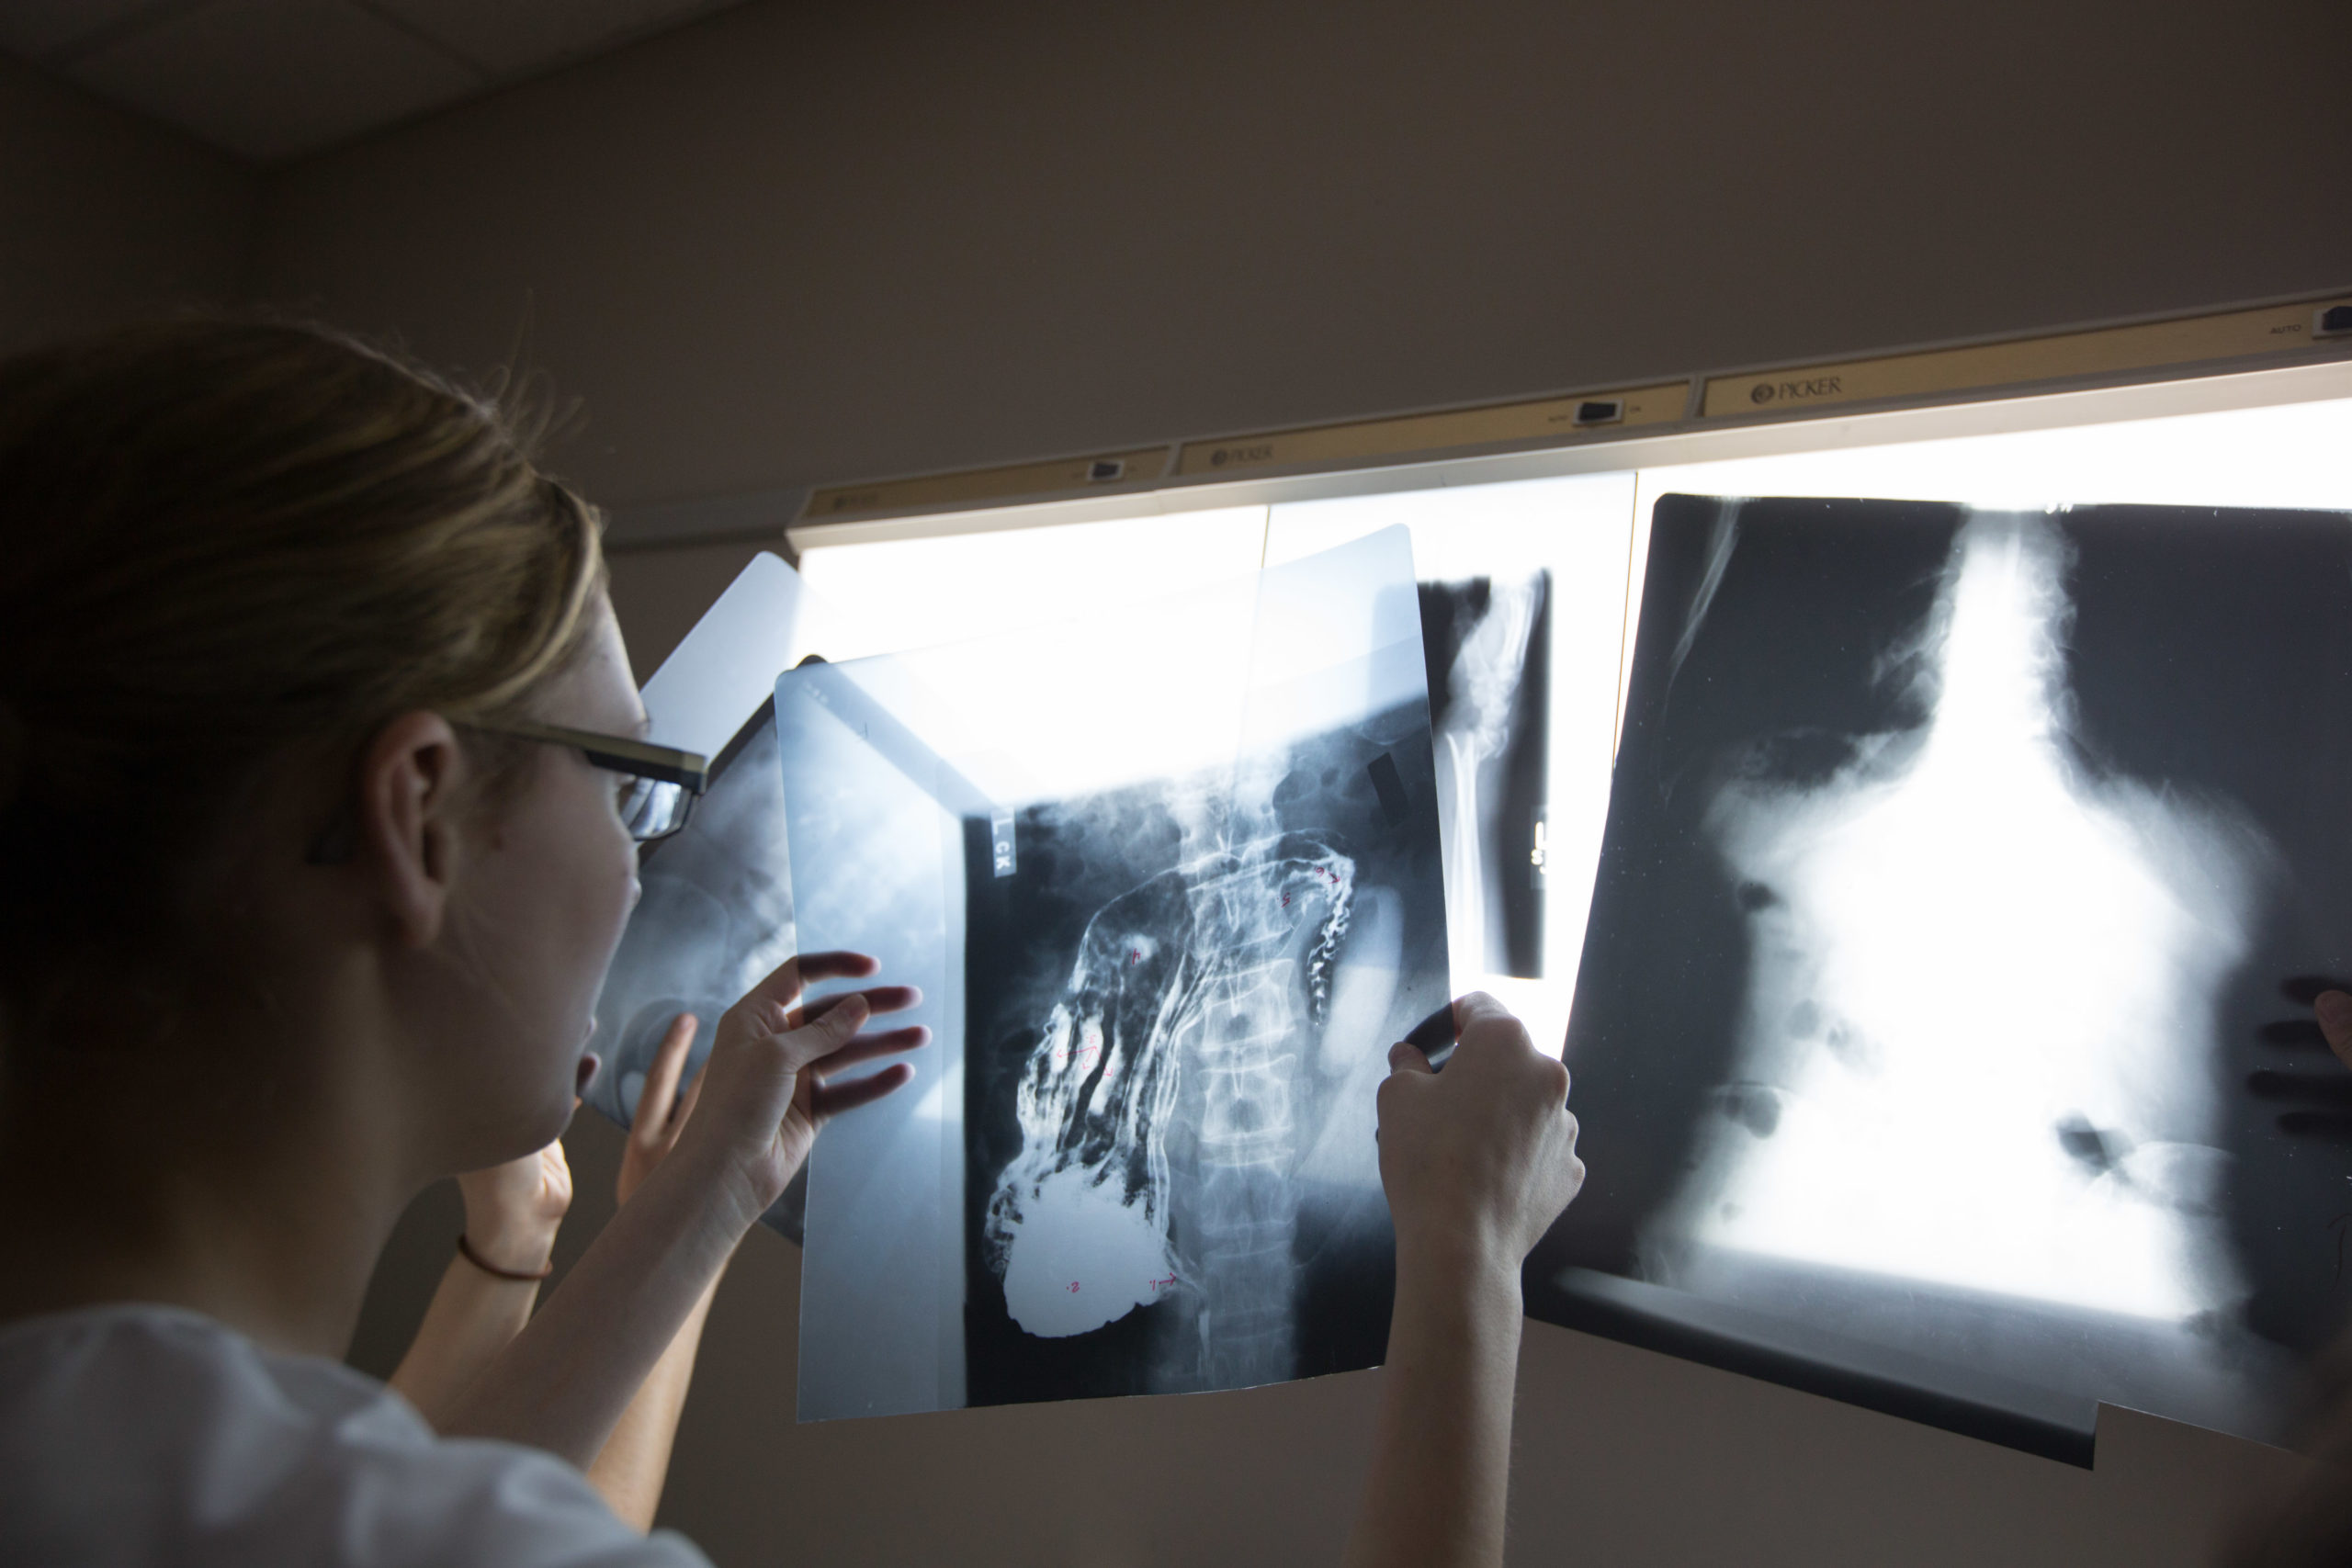 Radtec Student views an x-ray